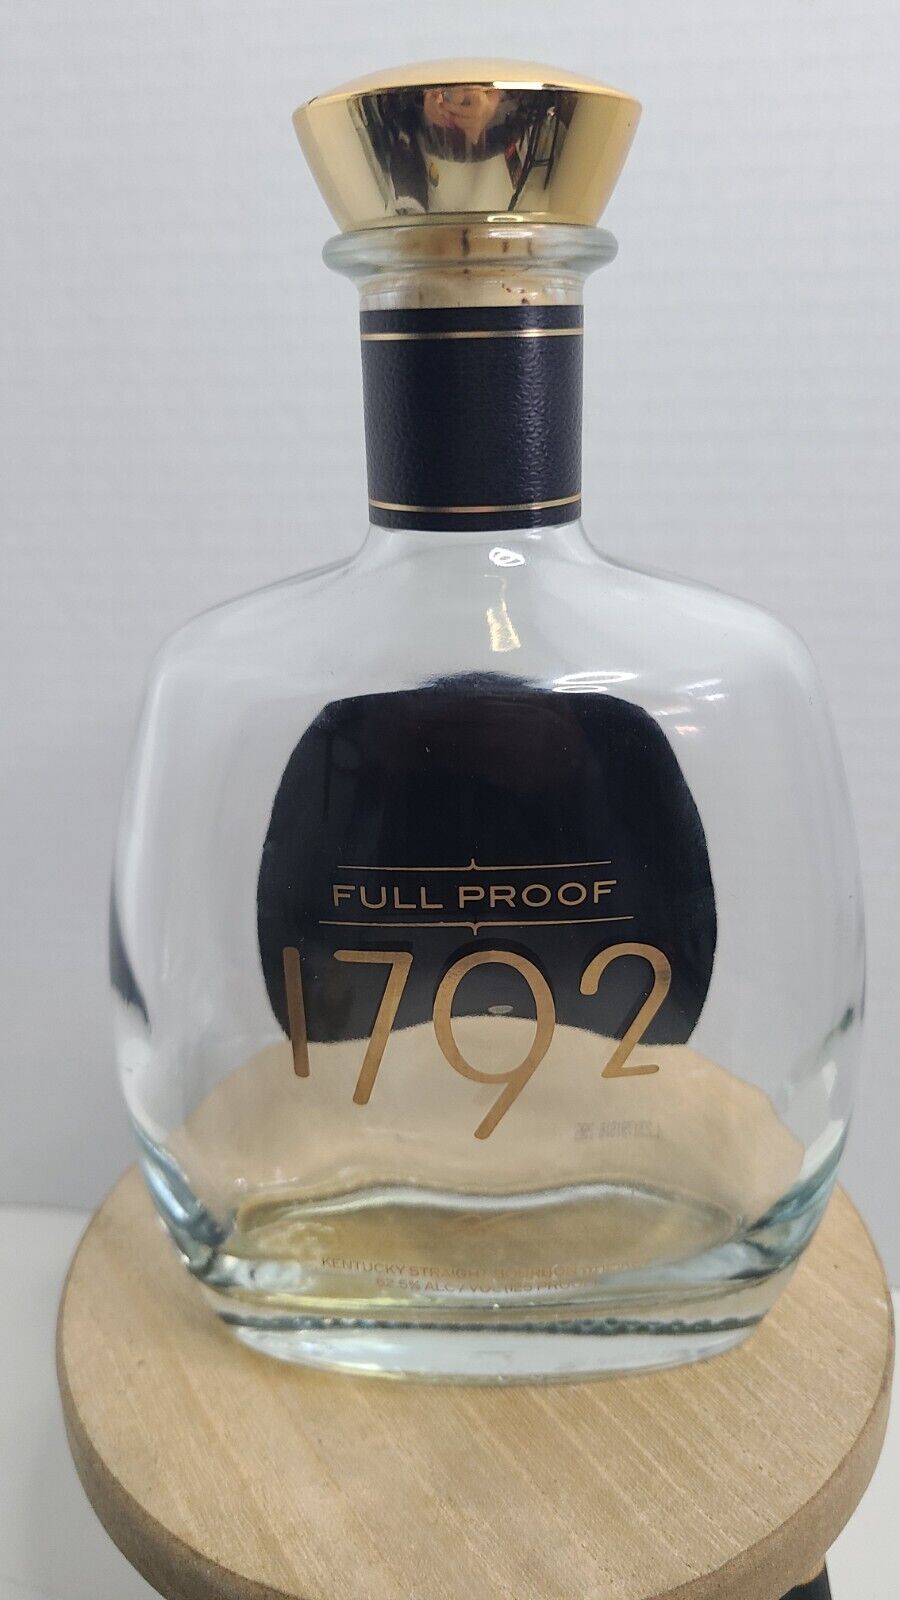 1792 Full Proof Bourbon Kentucky Straight Bourbon Bottle Decanter Look Cork Top